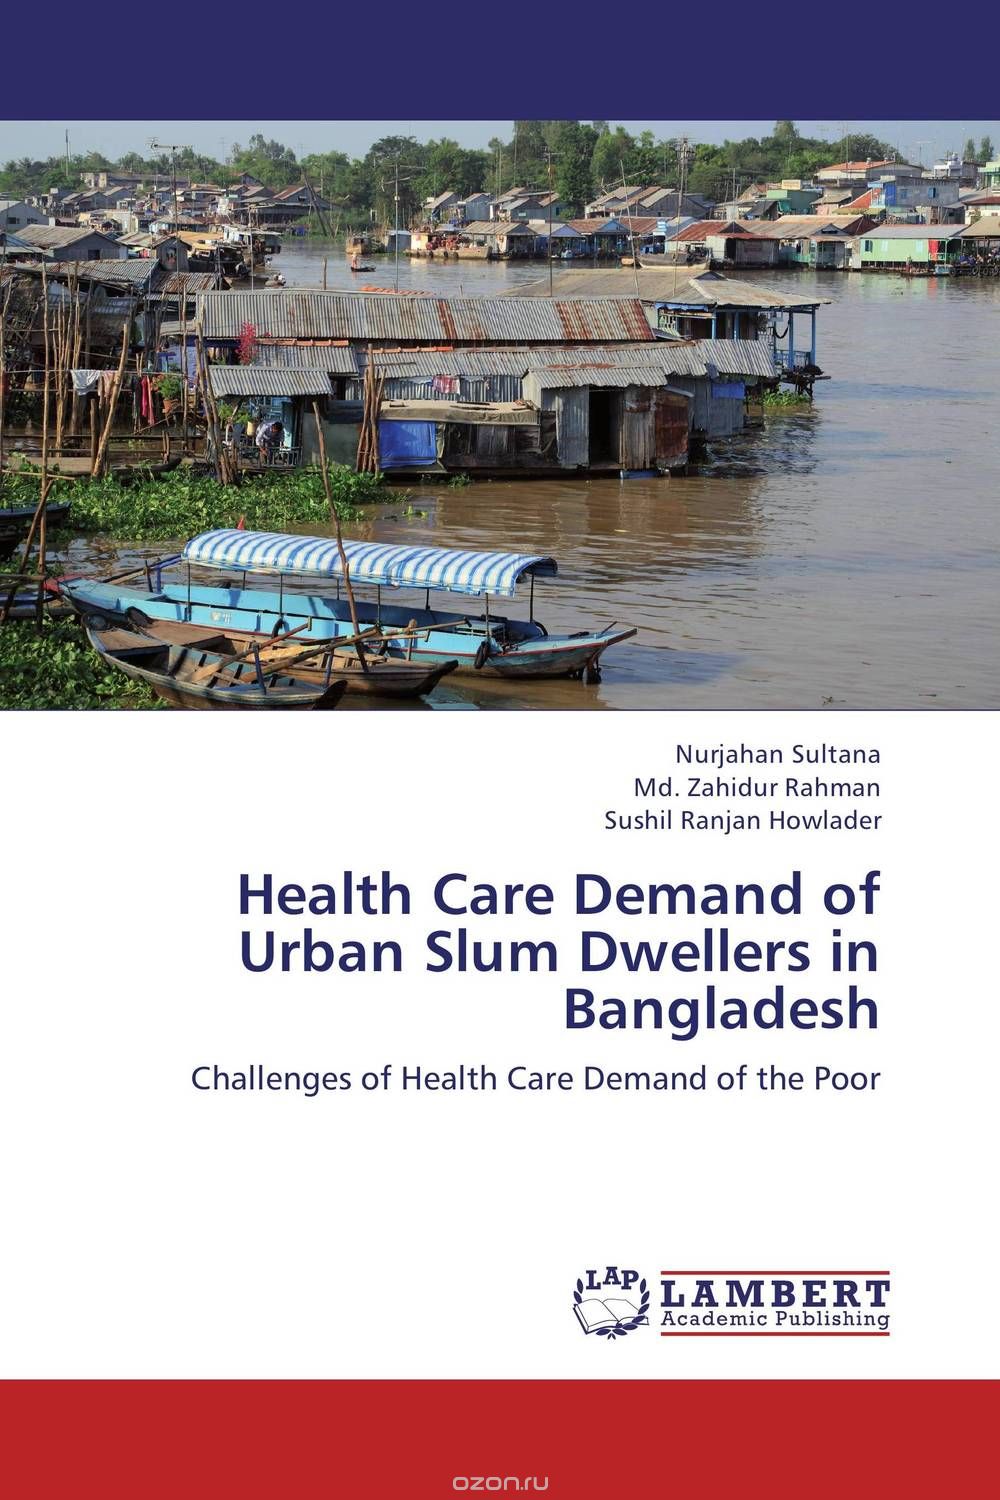 Скачать книгу "Health Care Demand of Urban Slum Dwellers in Bangladesh"